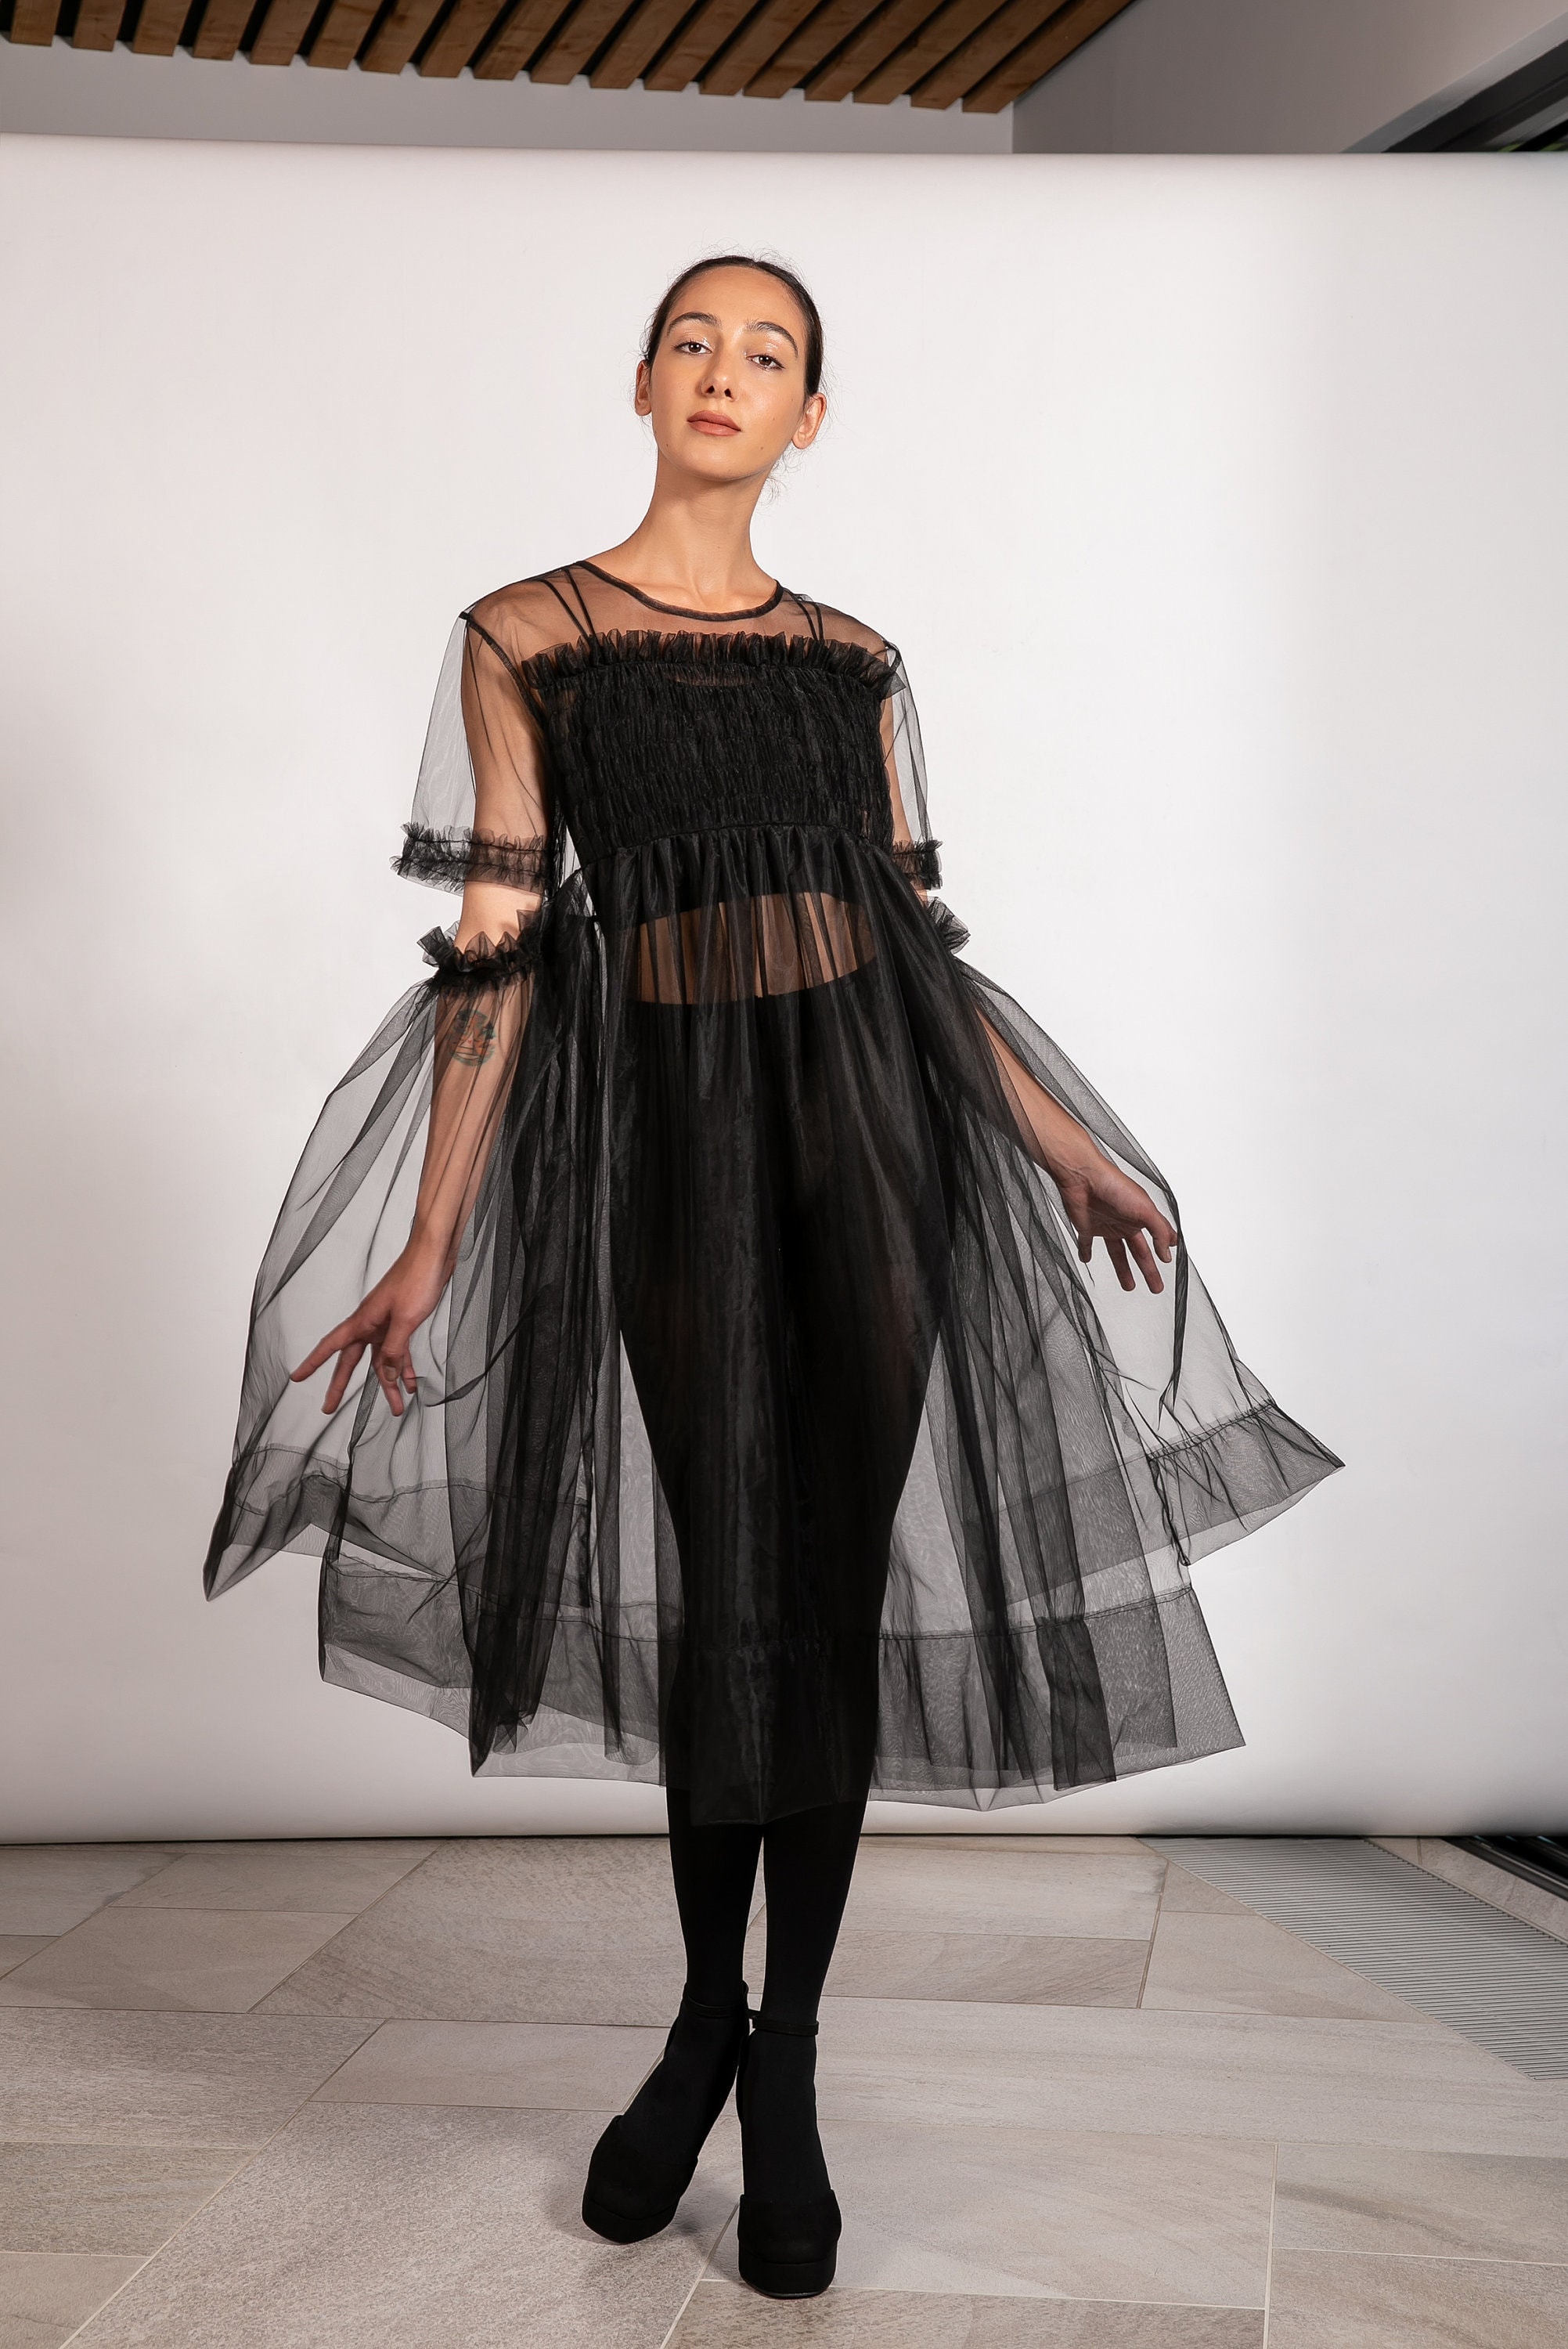 Black Tulle Dress, Sheer Party Dress, Tulle Cocktail Dress, Villanelle Dress,  See Through Black Dress, Avant Garde Clothing 